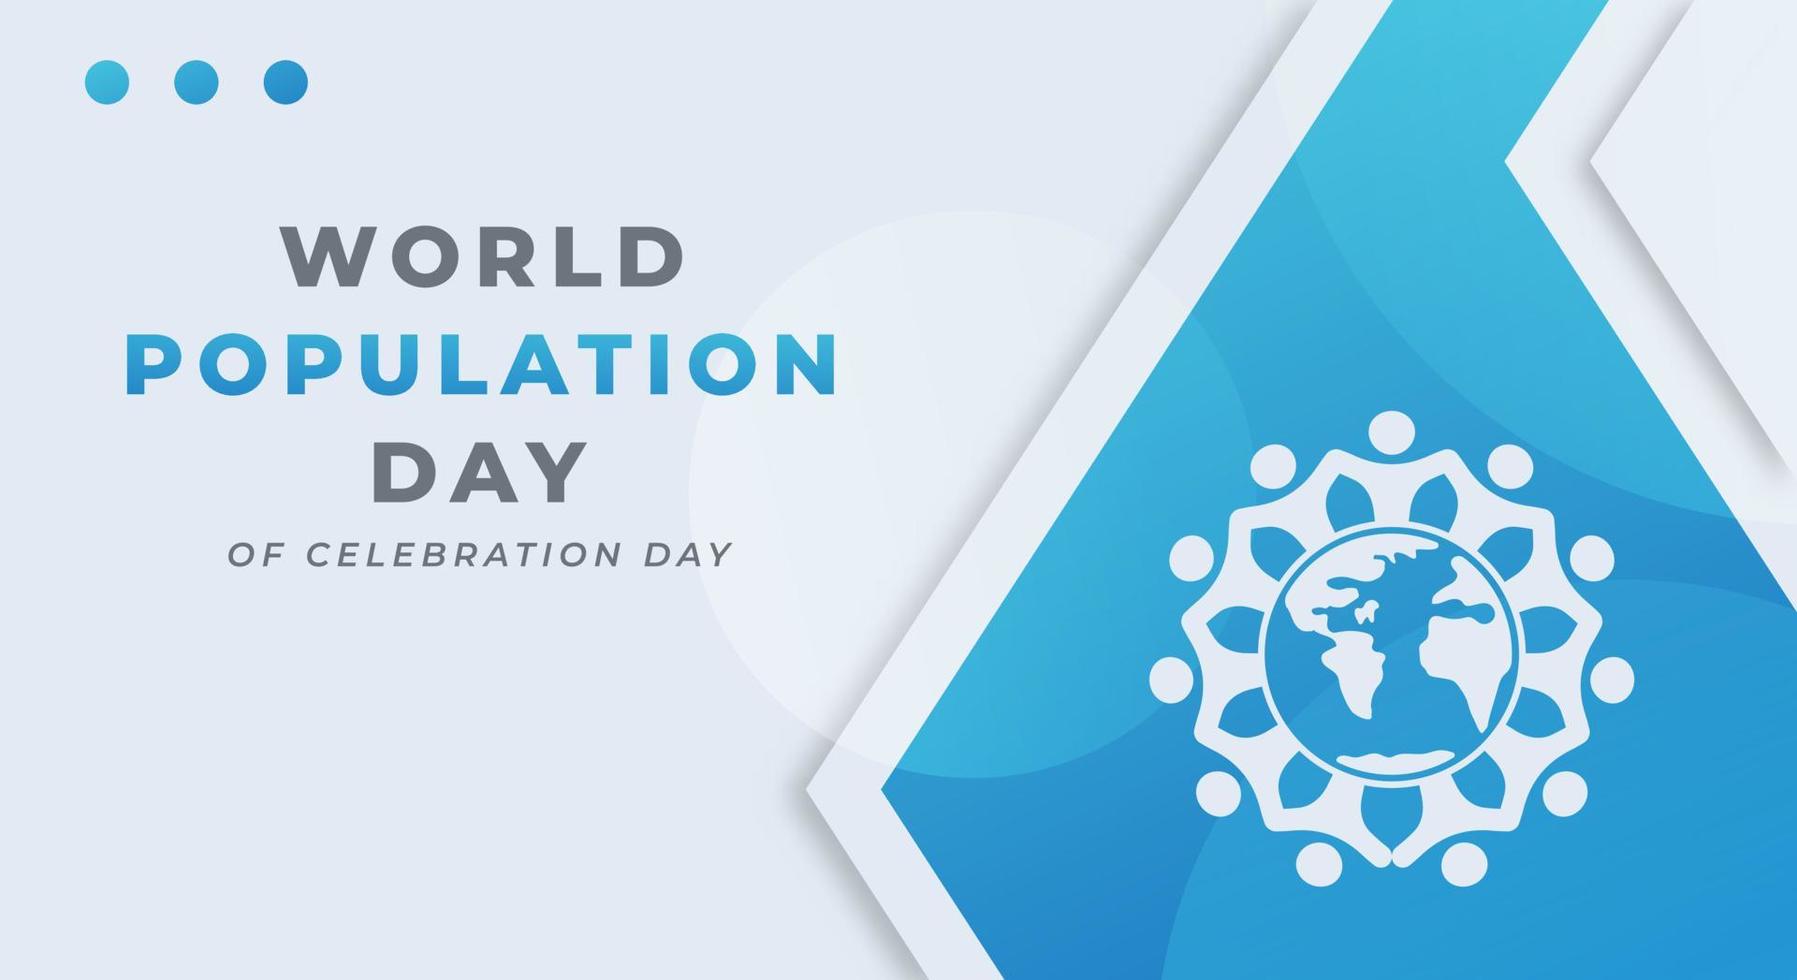 World Population Day Celebration Vector Design Illustration for Background, Poster, Banner, Advertising, Greeting Card